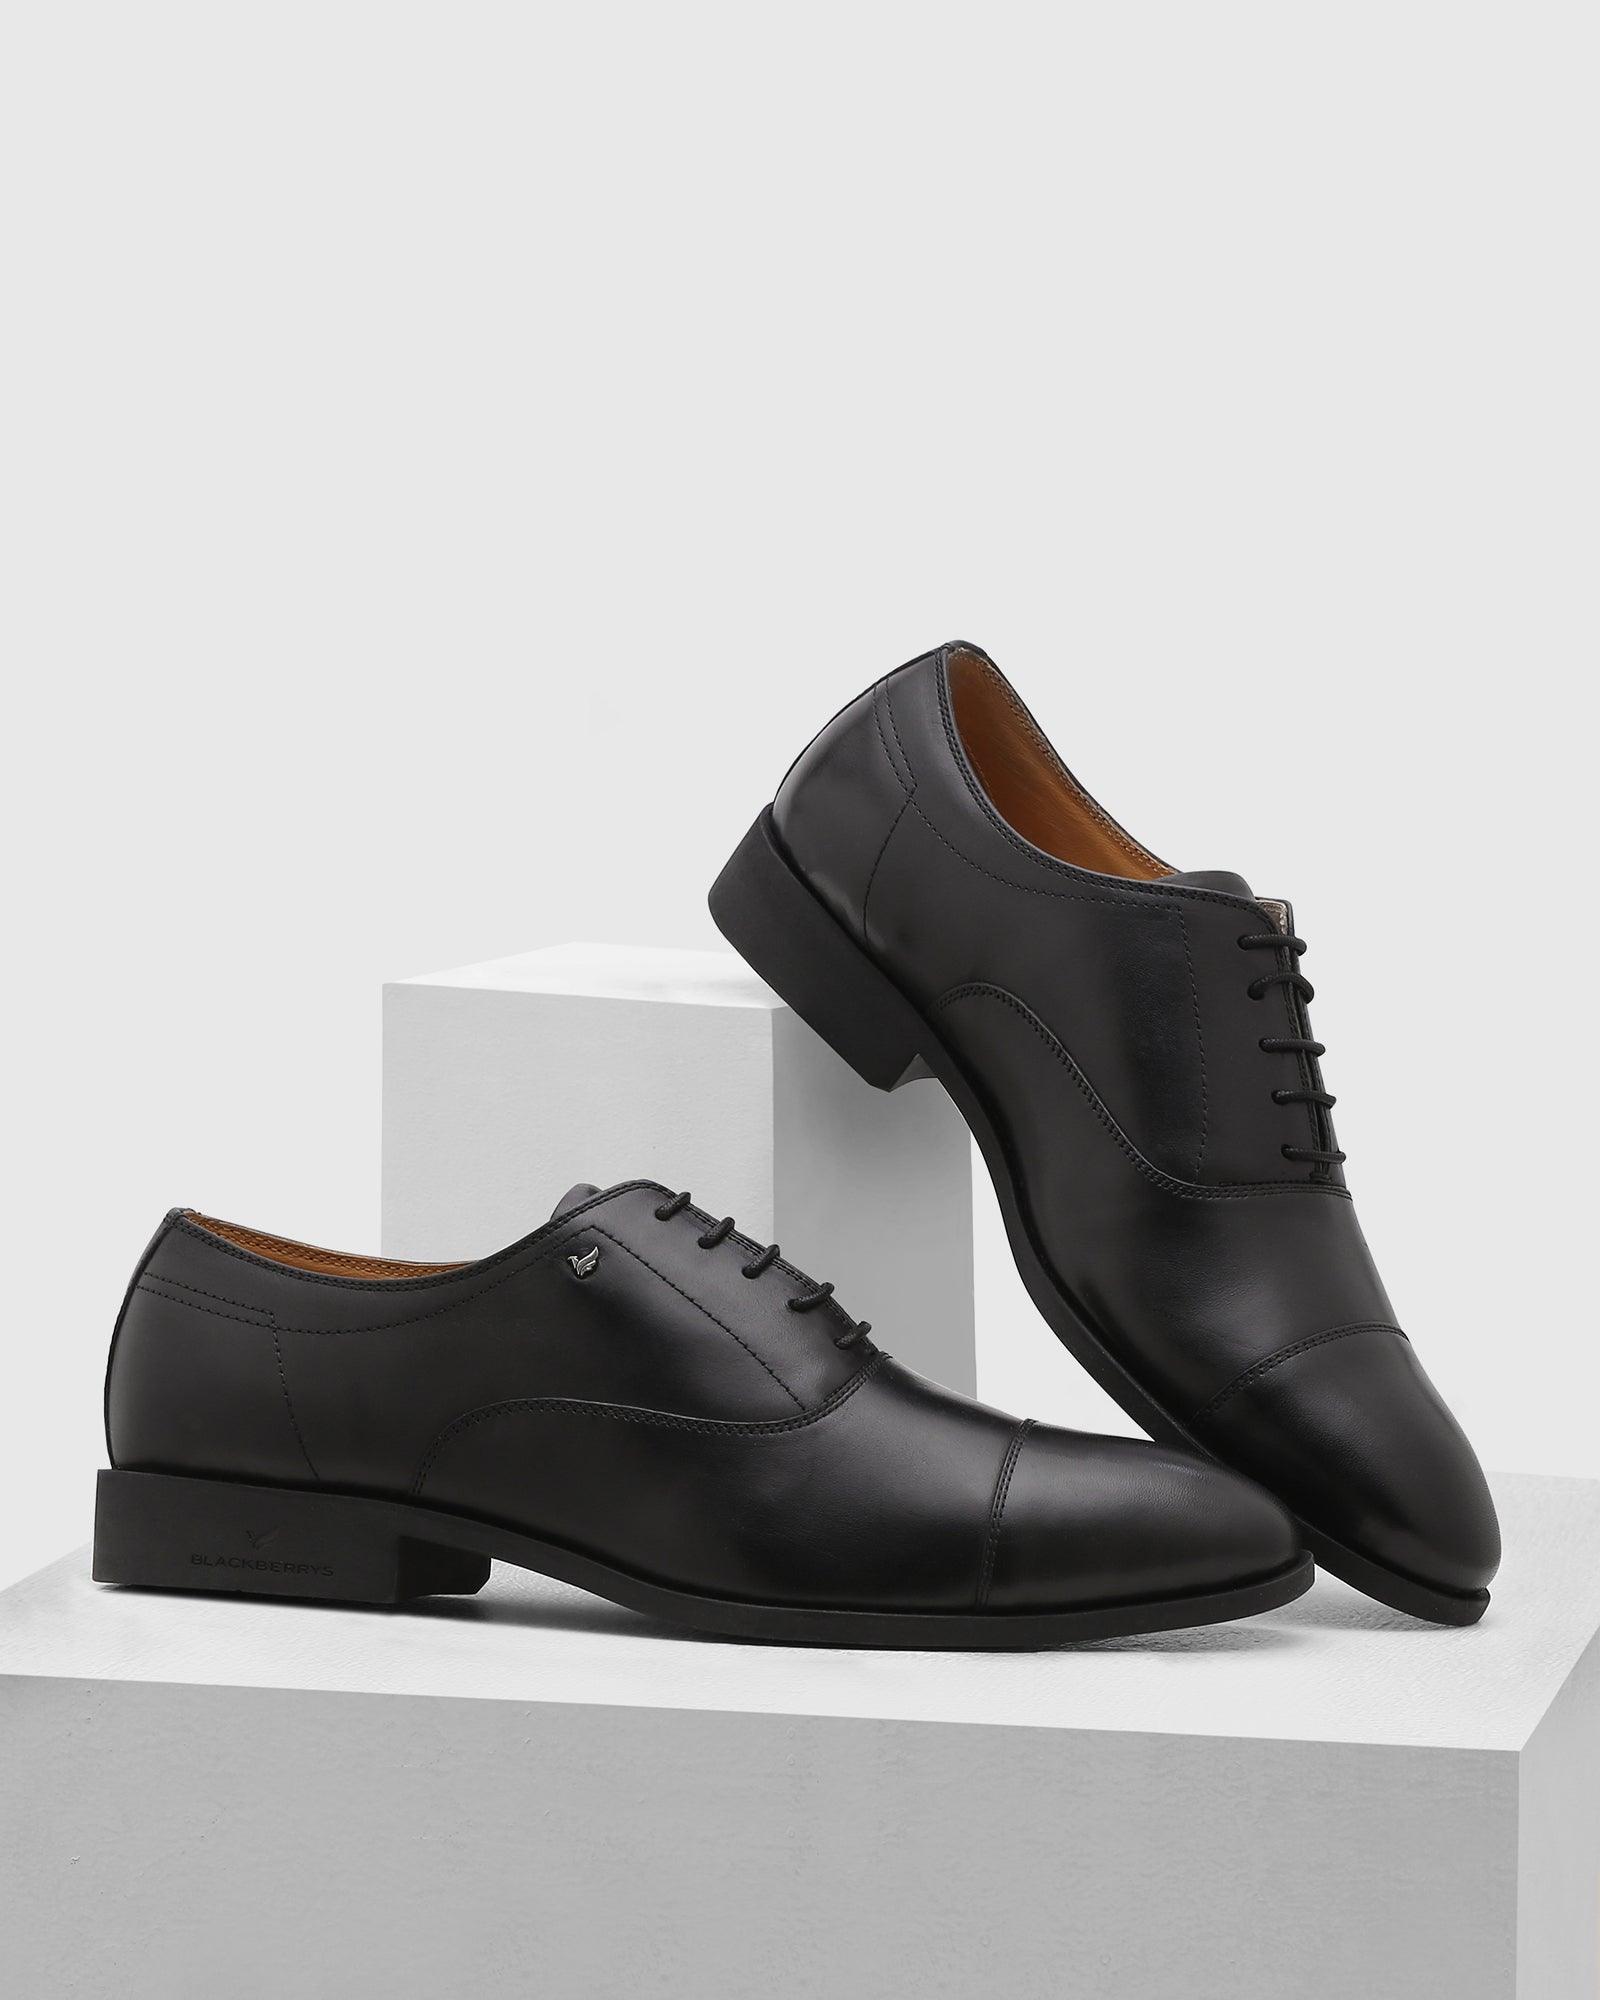 leather oxford shoes in black (qoila)